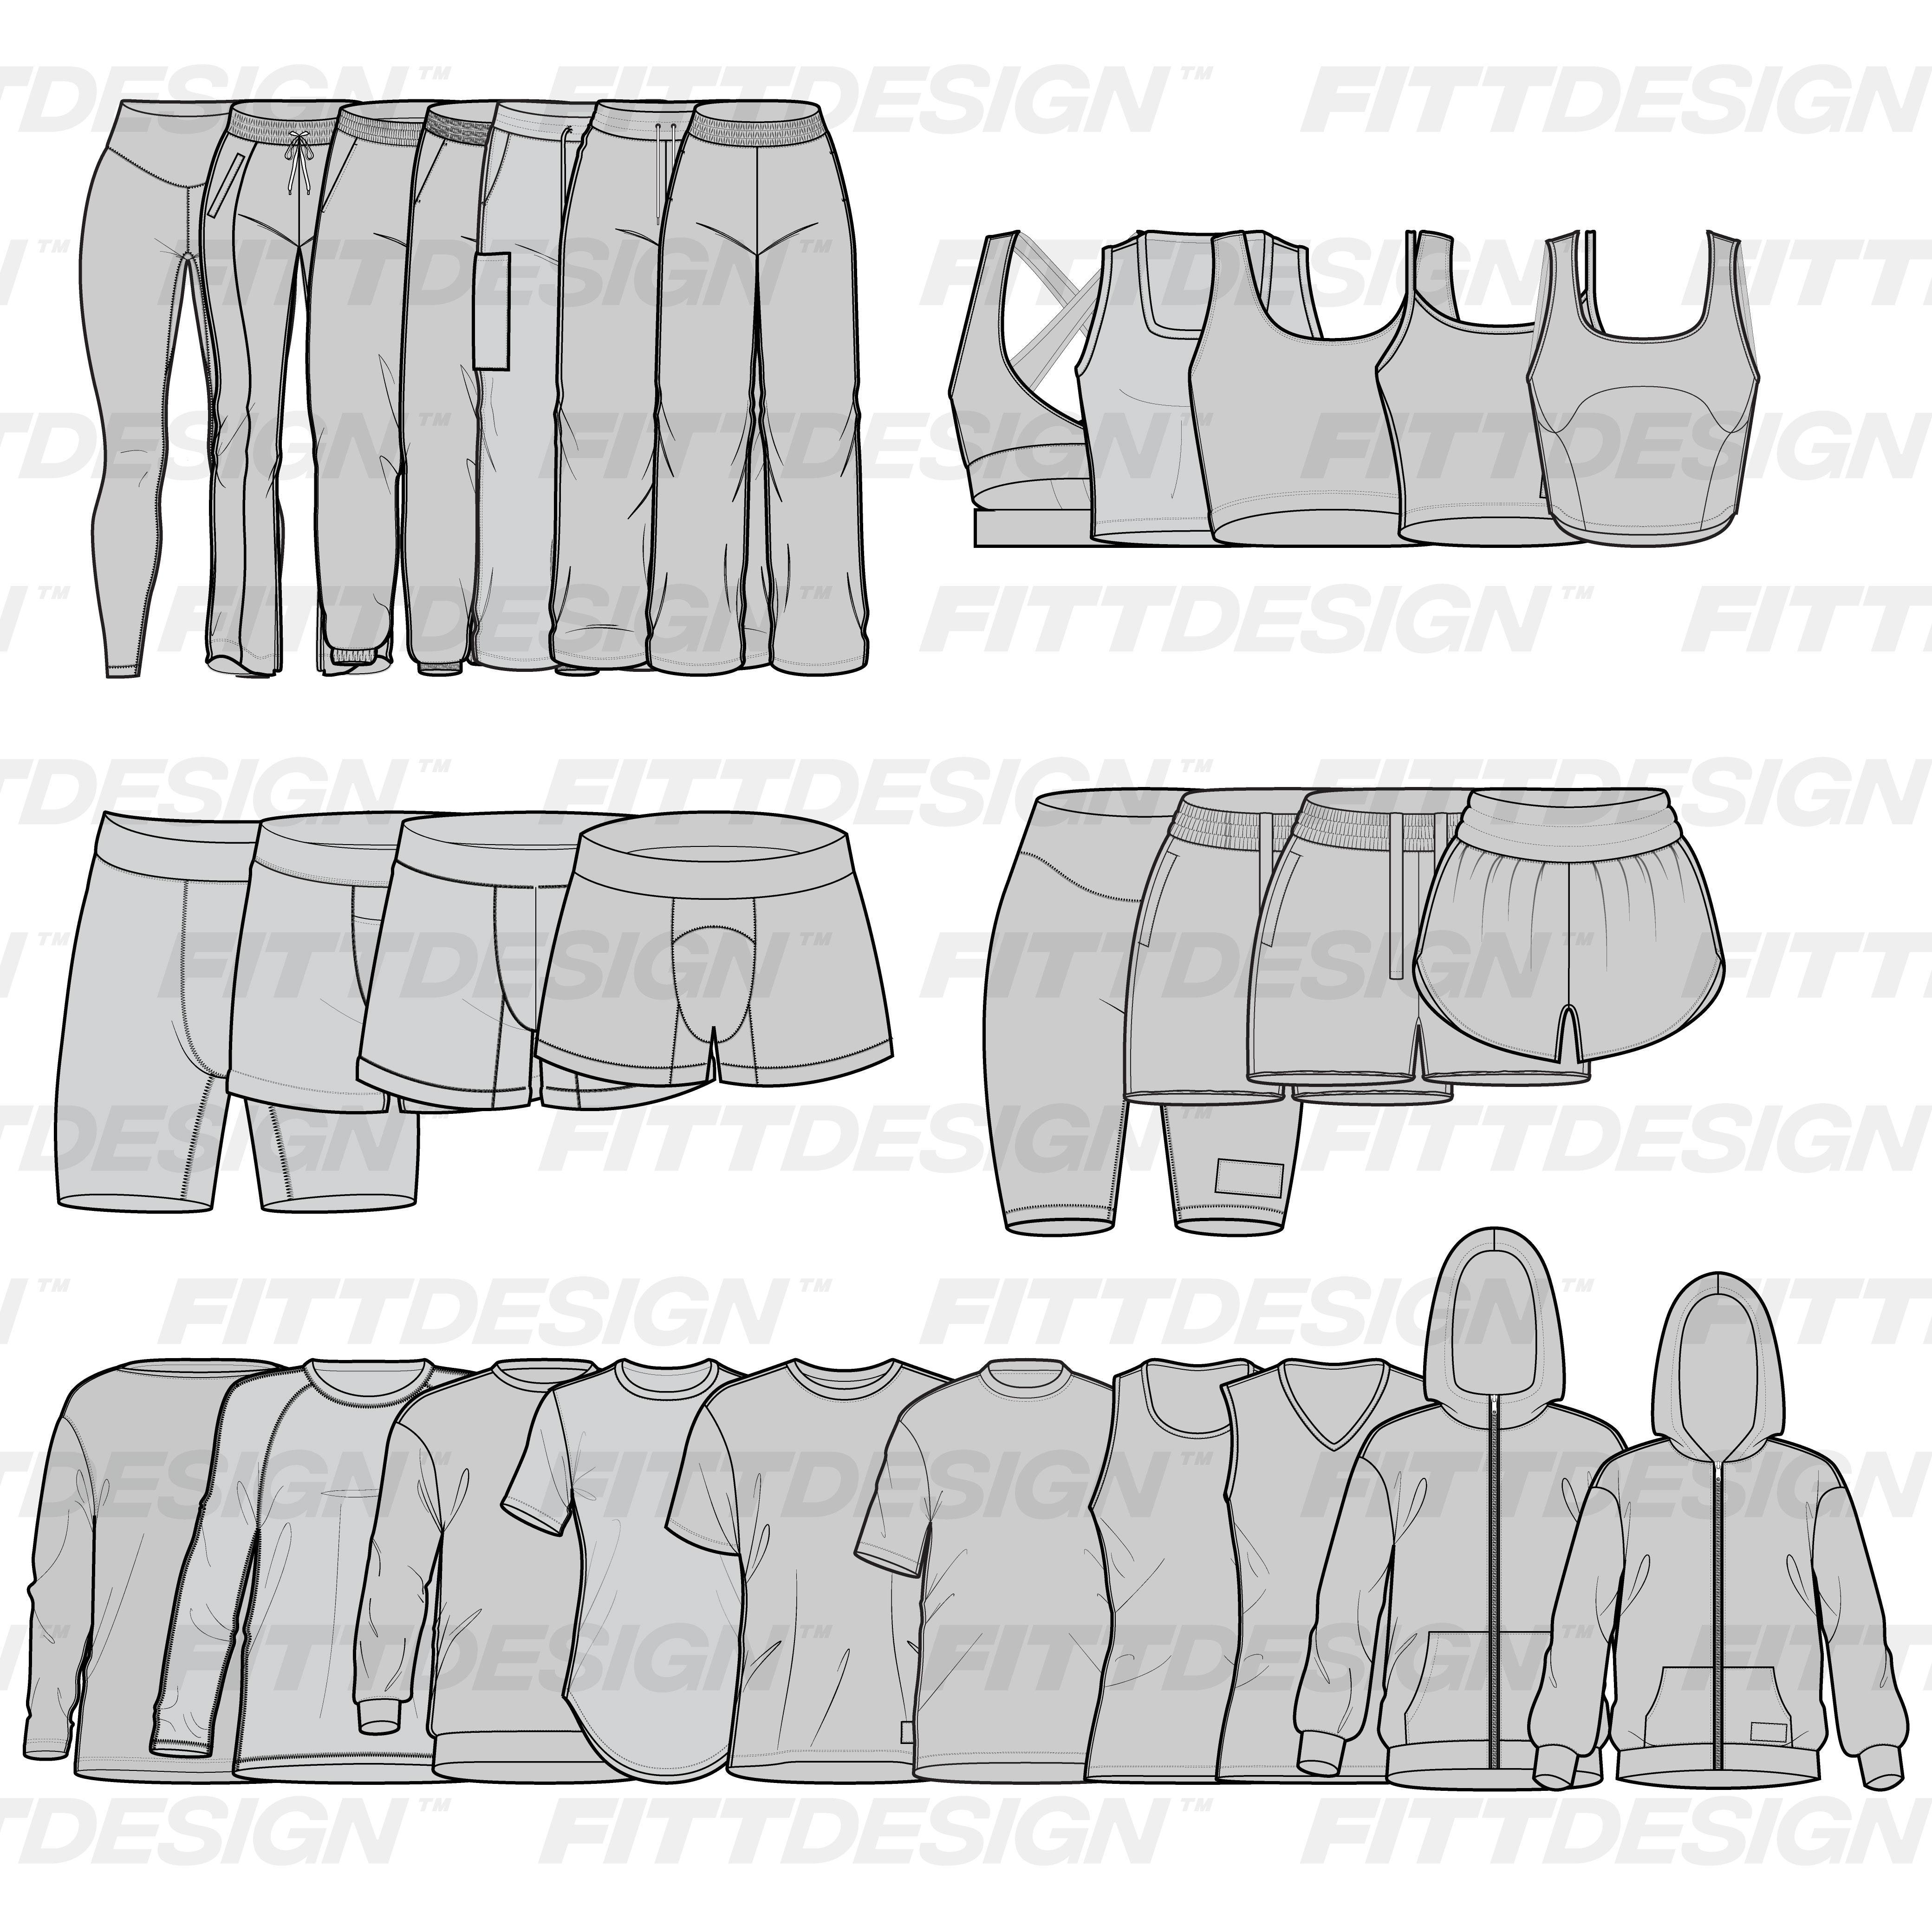 Men's Underwear Vectors fashion Flat Sketch for Adobe Illustrator